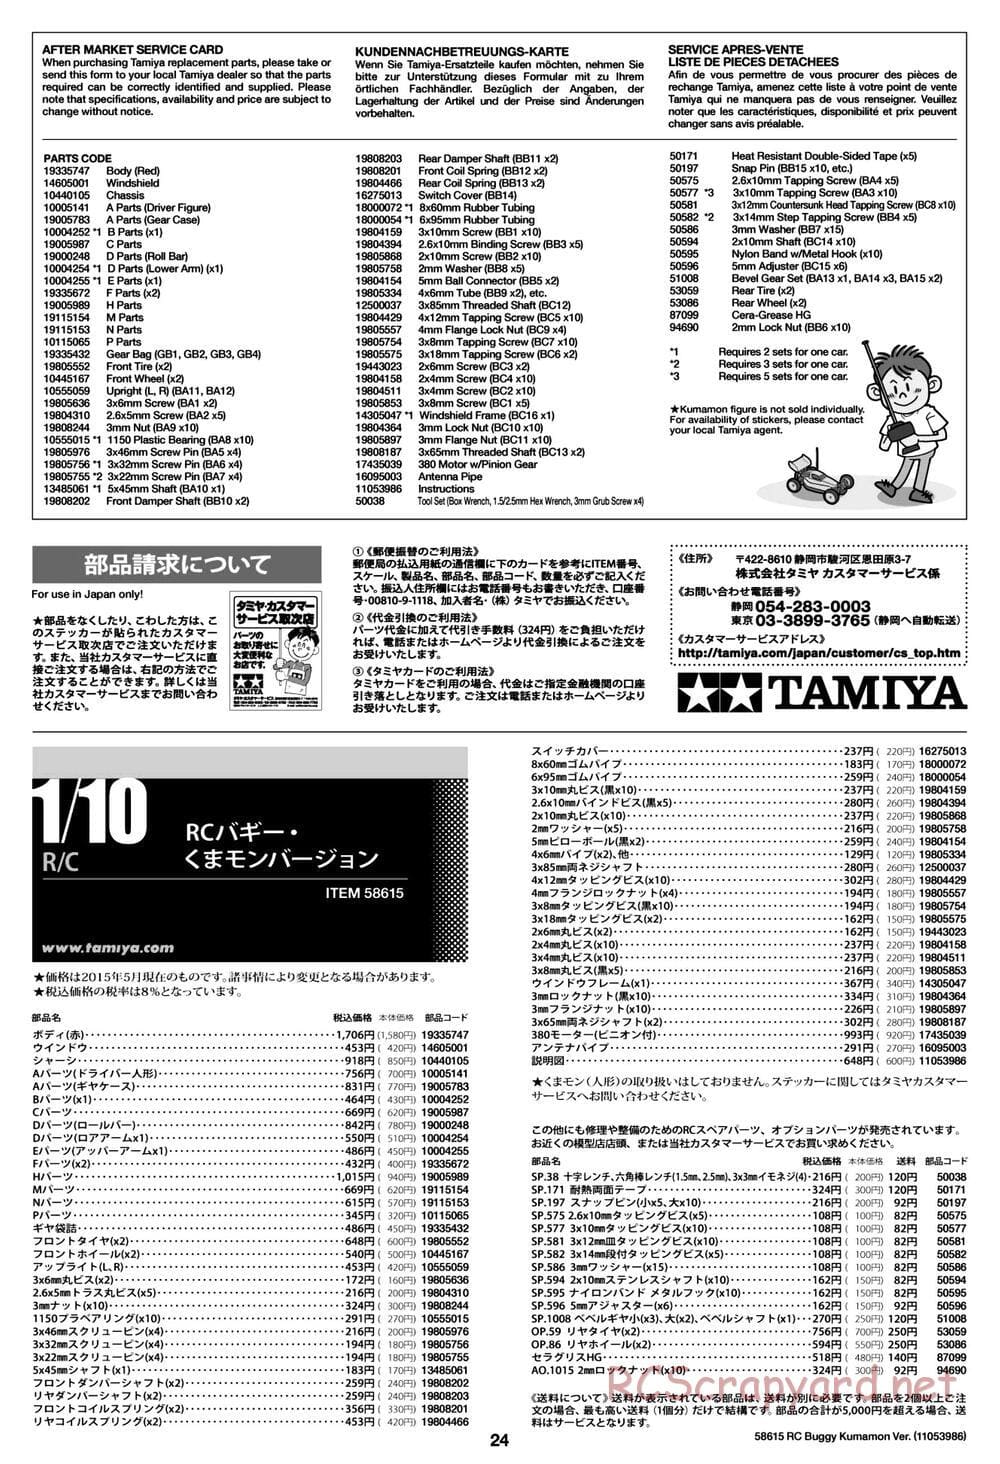 Tamiya - Buggy Kumamon Version Chassis - Manual - Page 24